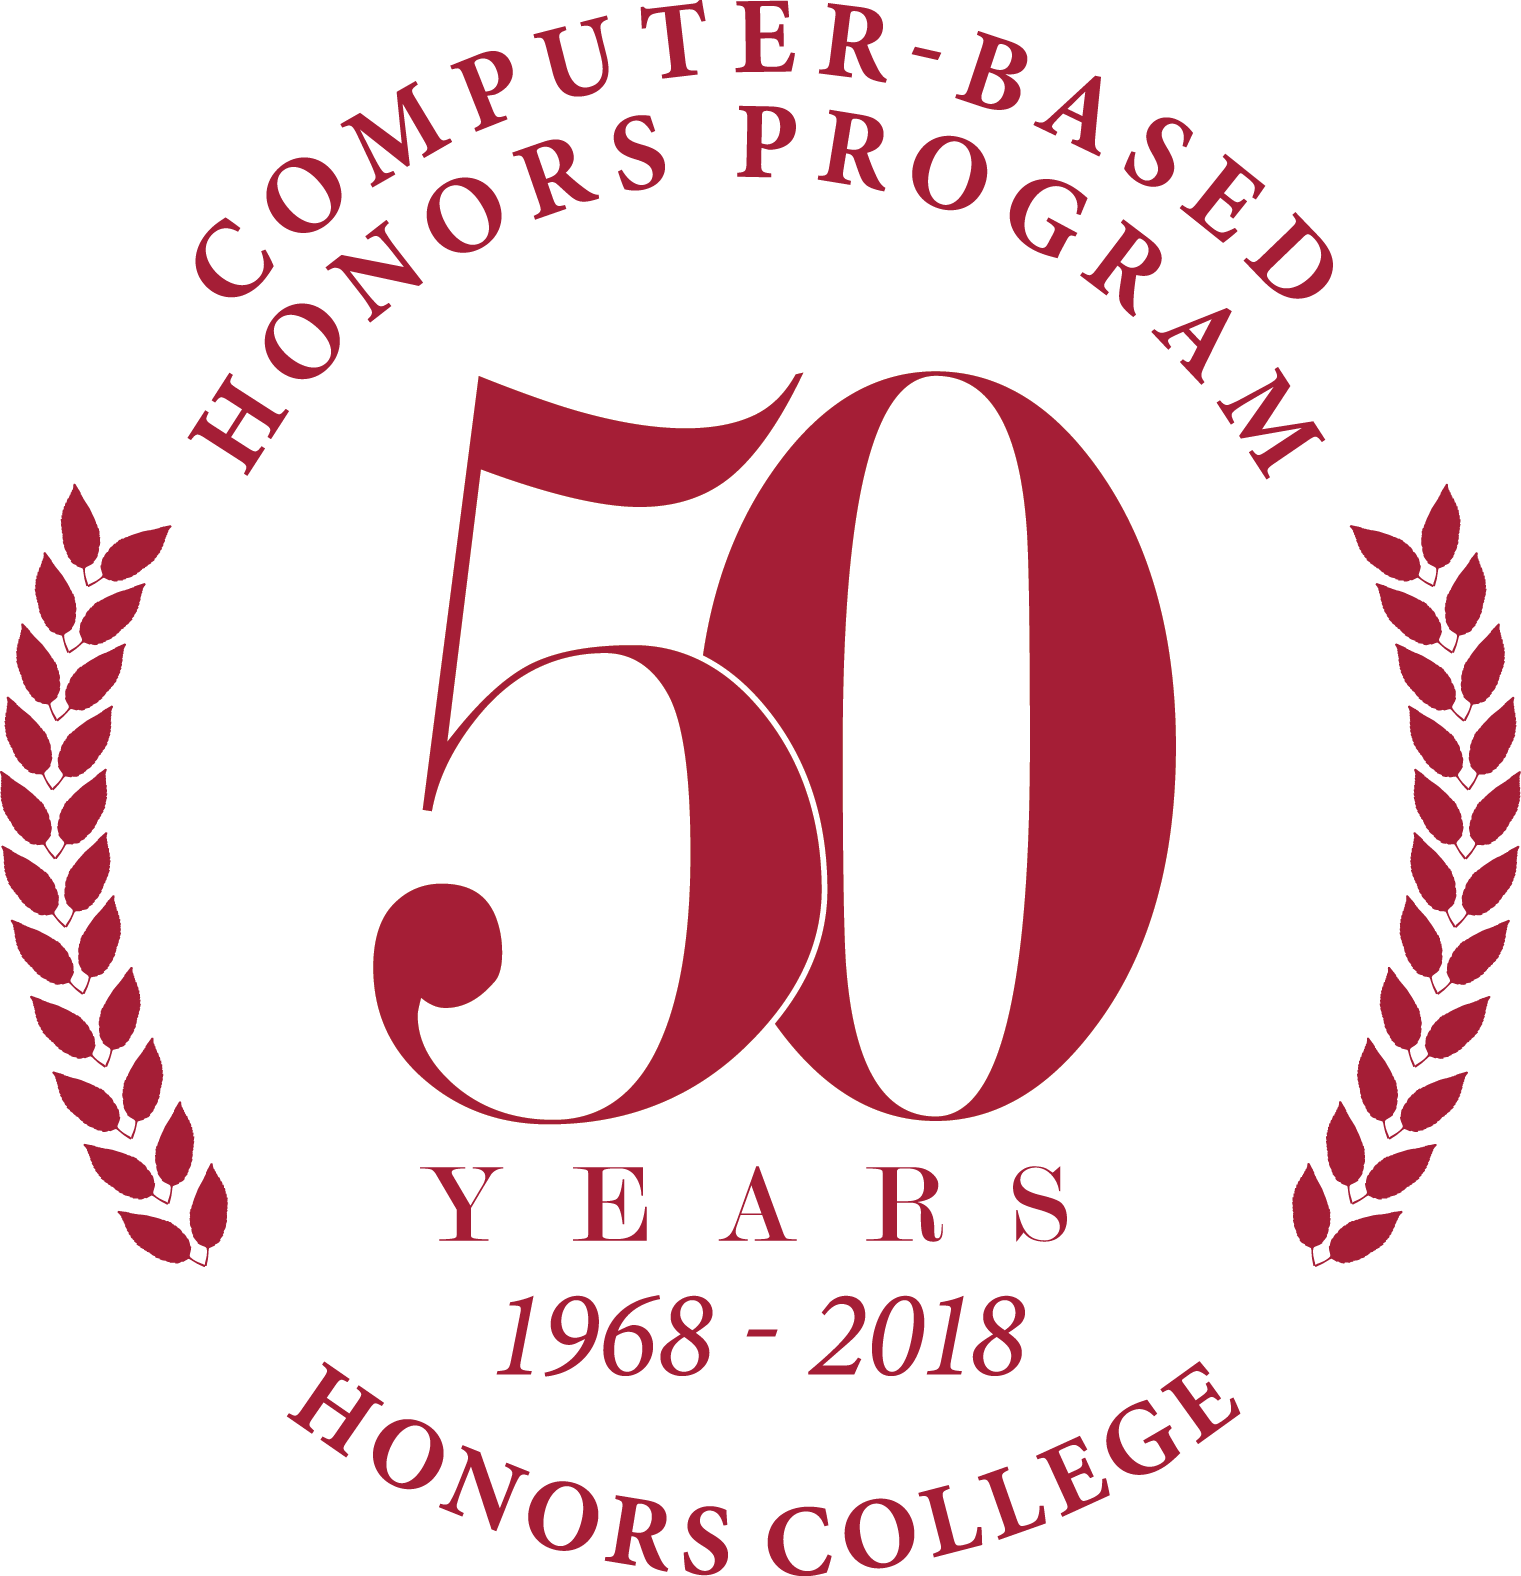 Logo for Computer-Based Honors Program 50 years anniversary 1968-2008